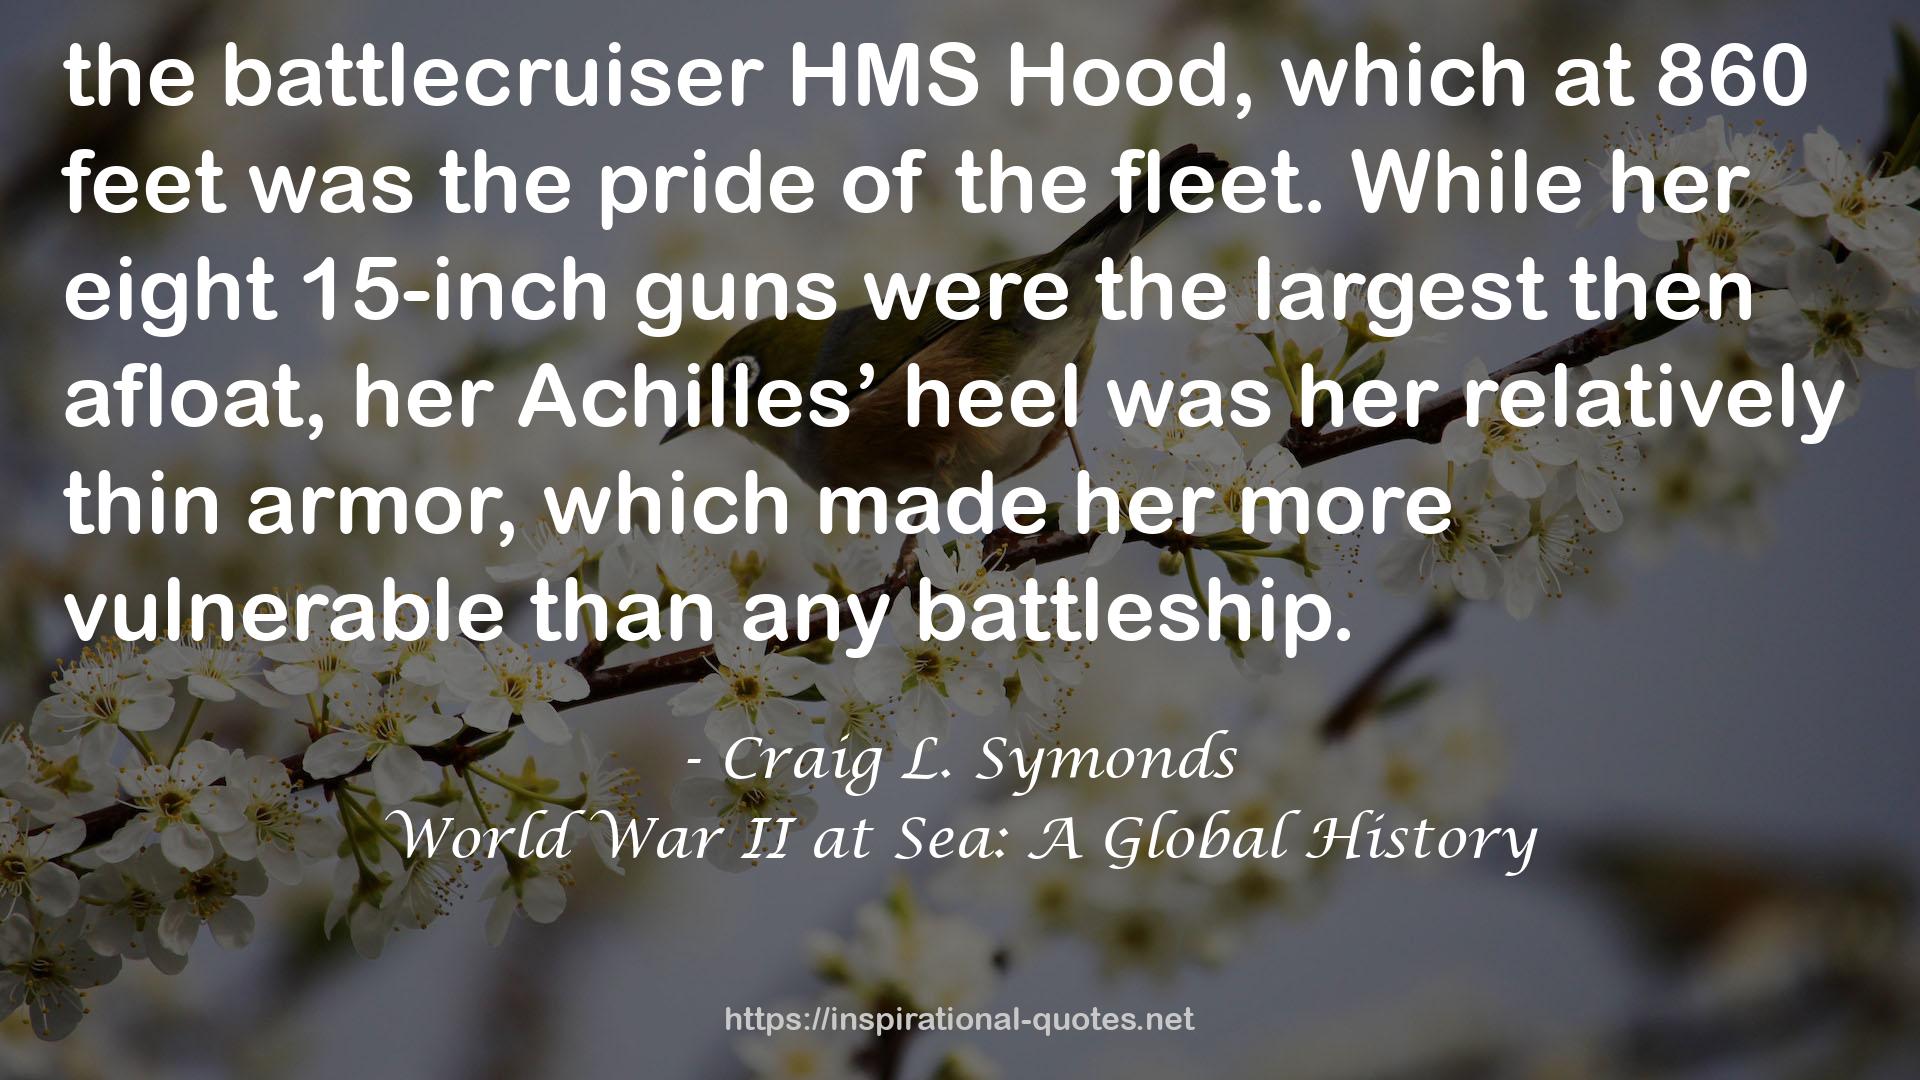 World War II at Sea: A Global History QUOTES